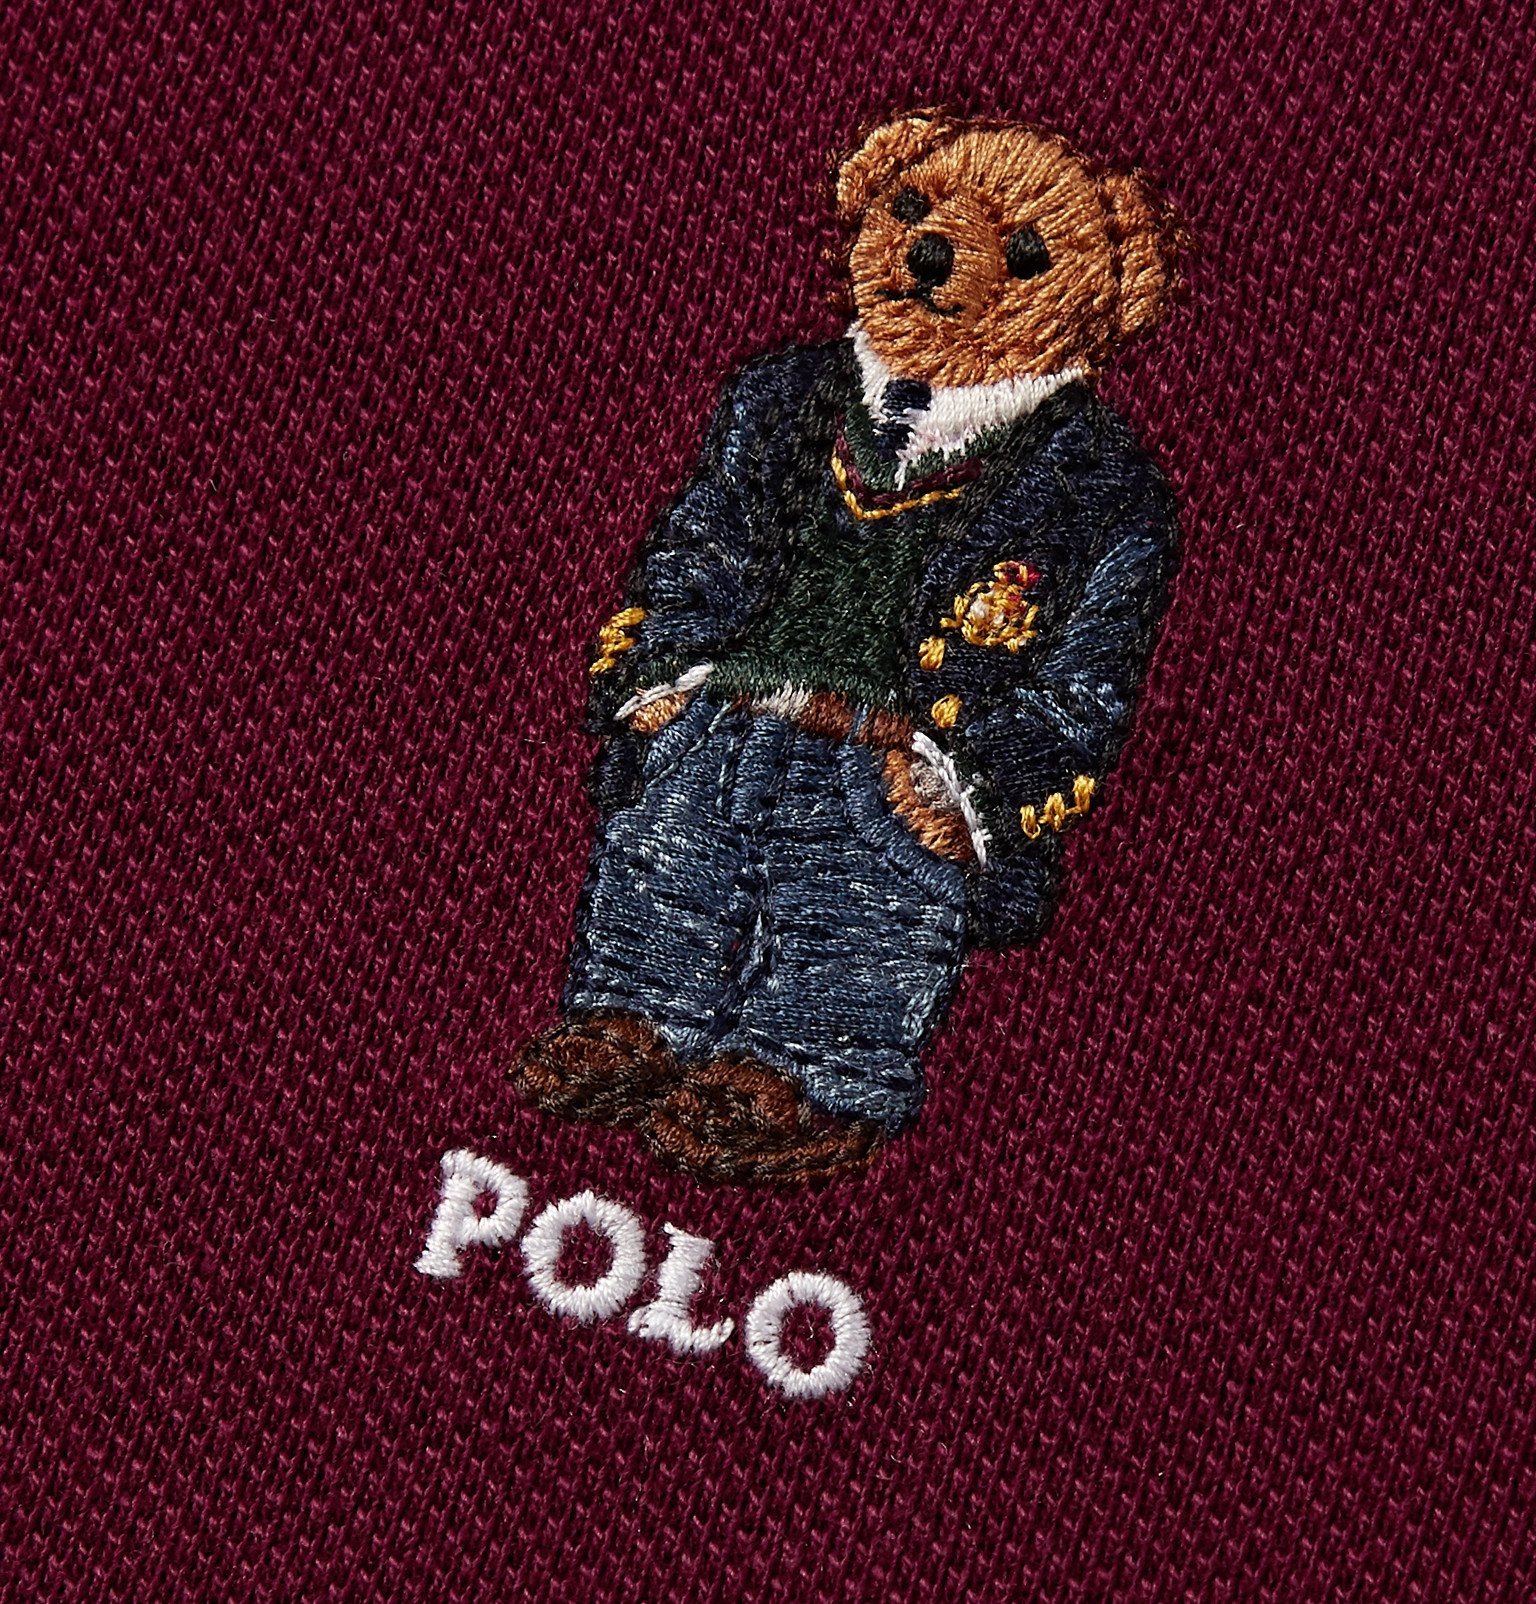 Polo Ralph Lauren - Slim-Fit Embroidered Cotton-Piqué Polo Shirt 